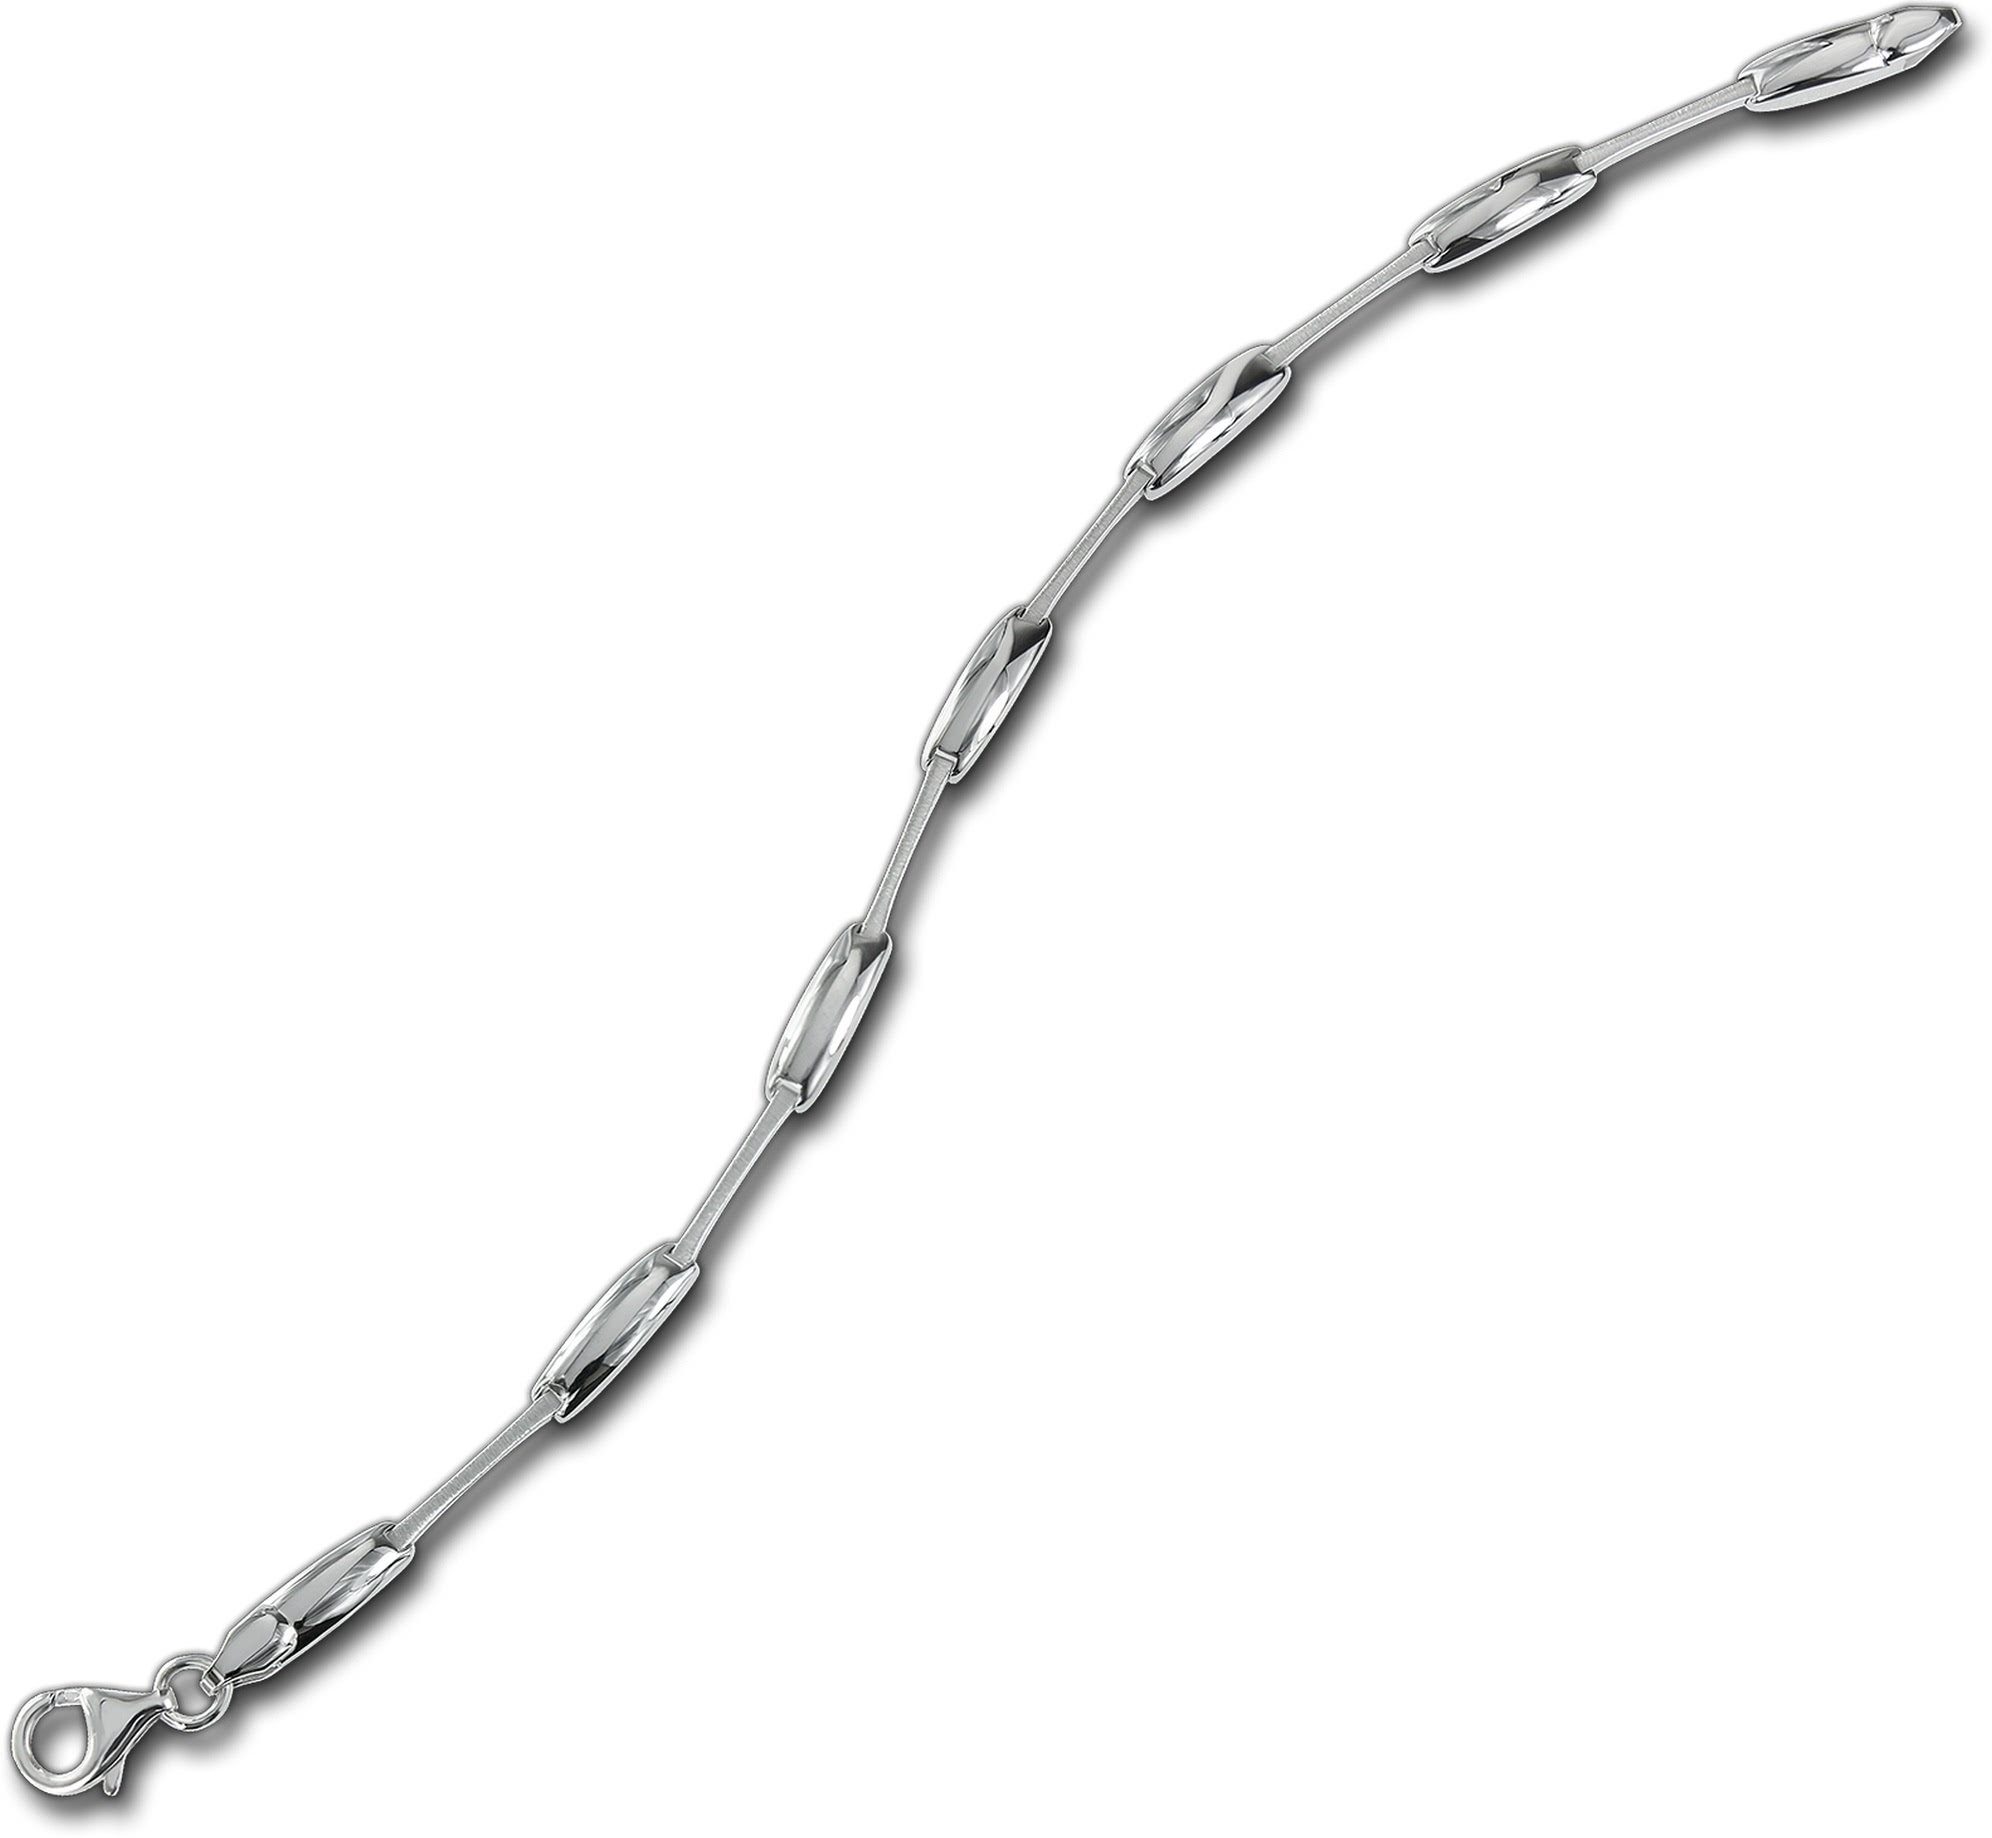 Balia Silberarmband Balia mattiert ca. 19,3cm, Silber Armband Silber (Design) Damen (Armband), Armband 925 für